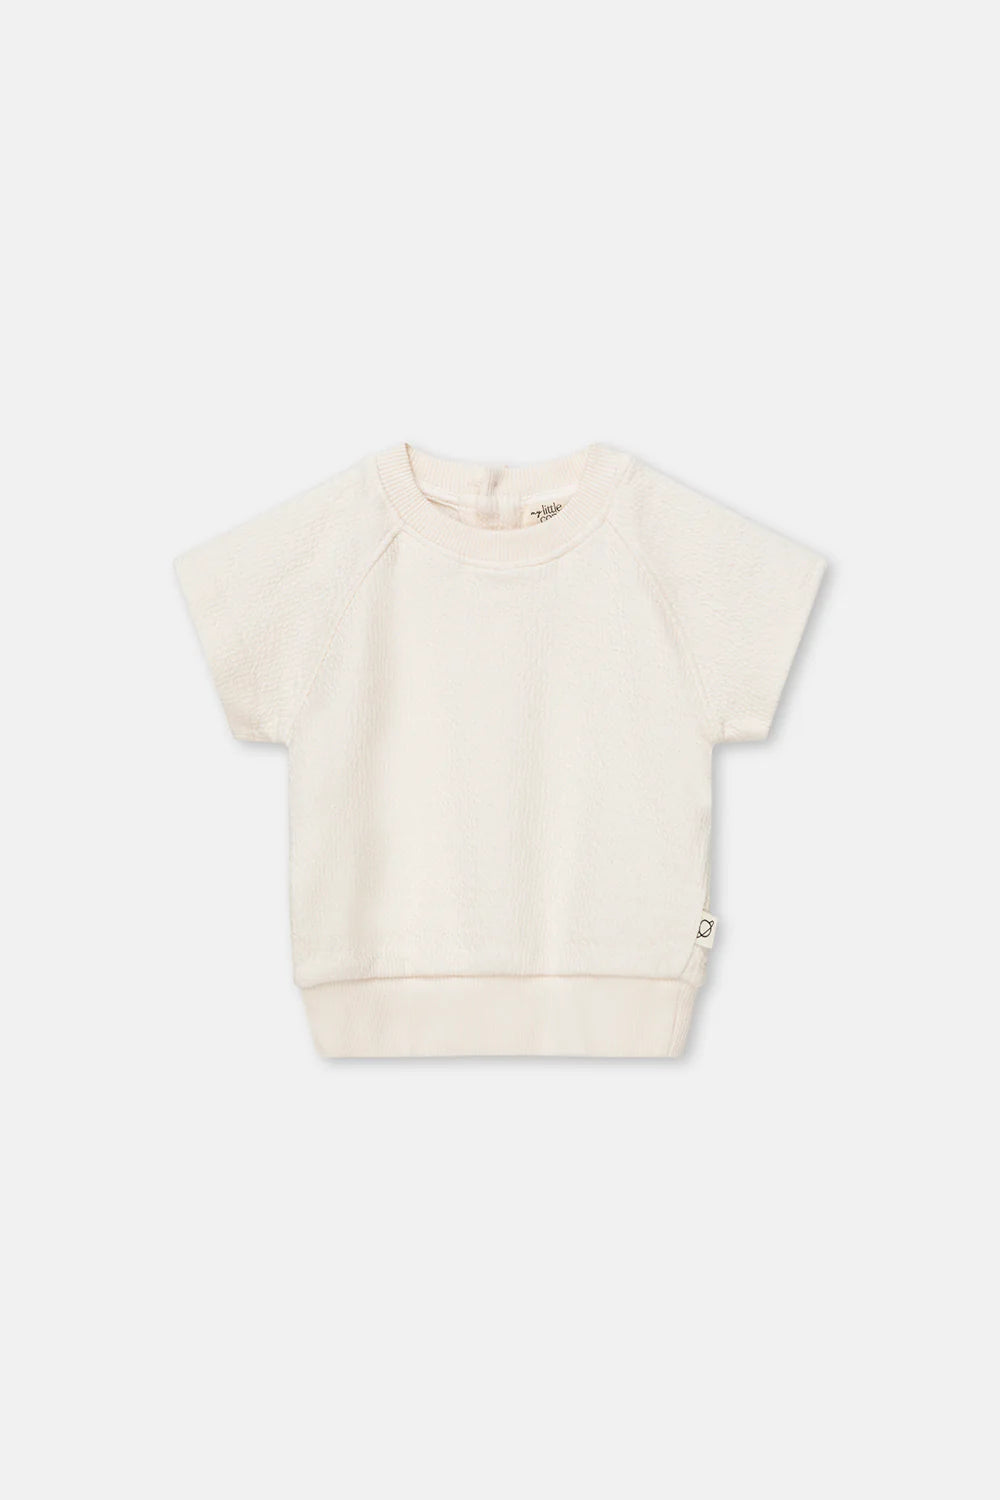 T-Shirt Baby Boy Billy Ivory - ملابس